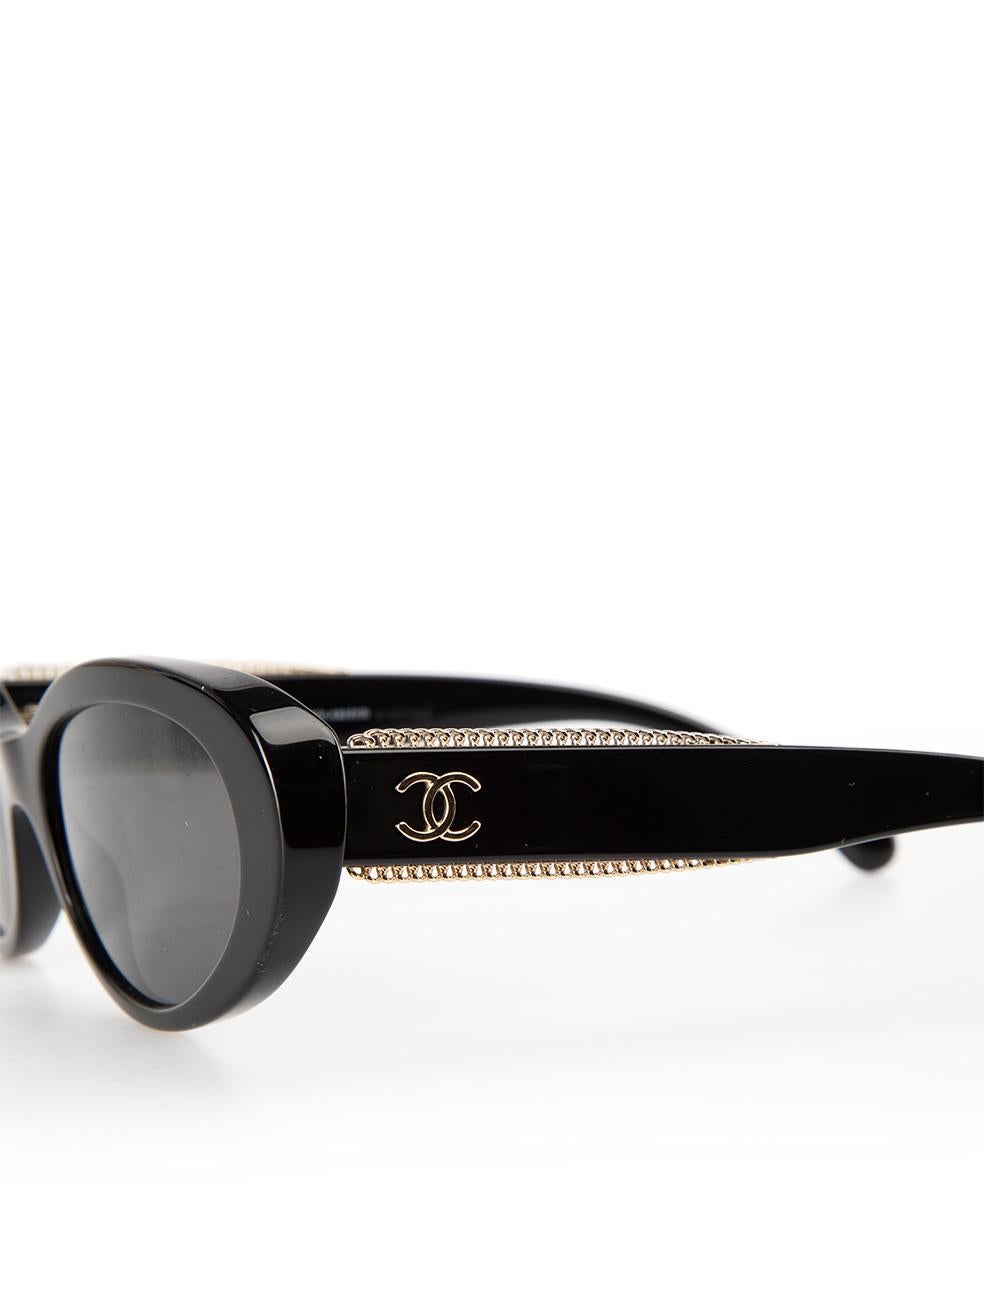 Chanel Black Oval Sunglasses 2